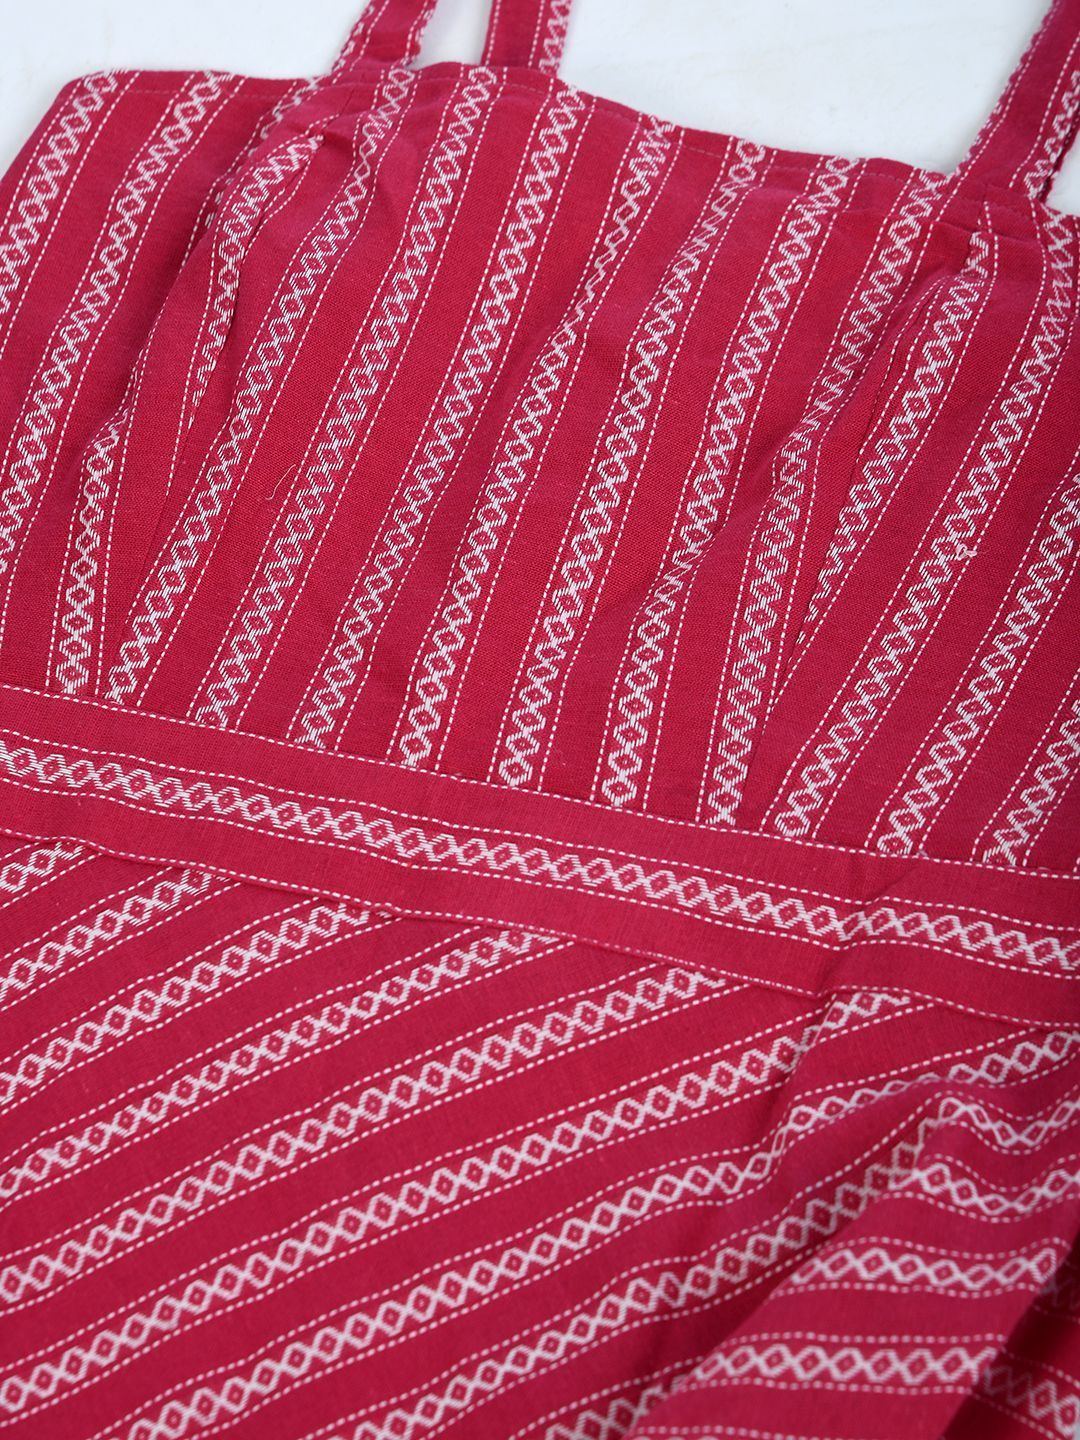 Women's Pink Cotton Printed Sleeveless Off Shoulder Casual Dress - Myshka